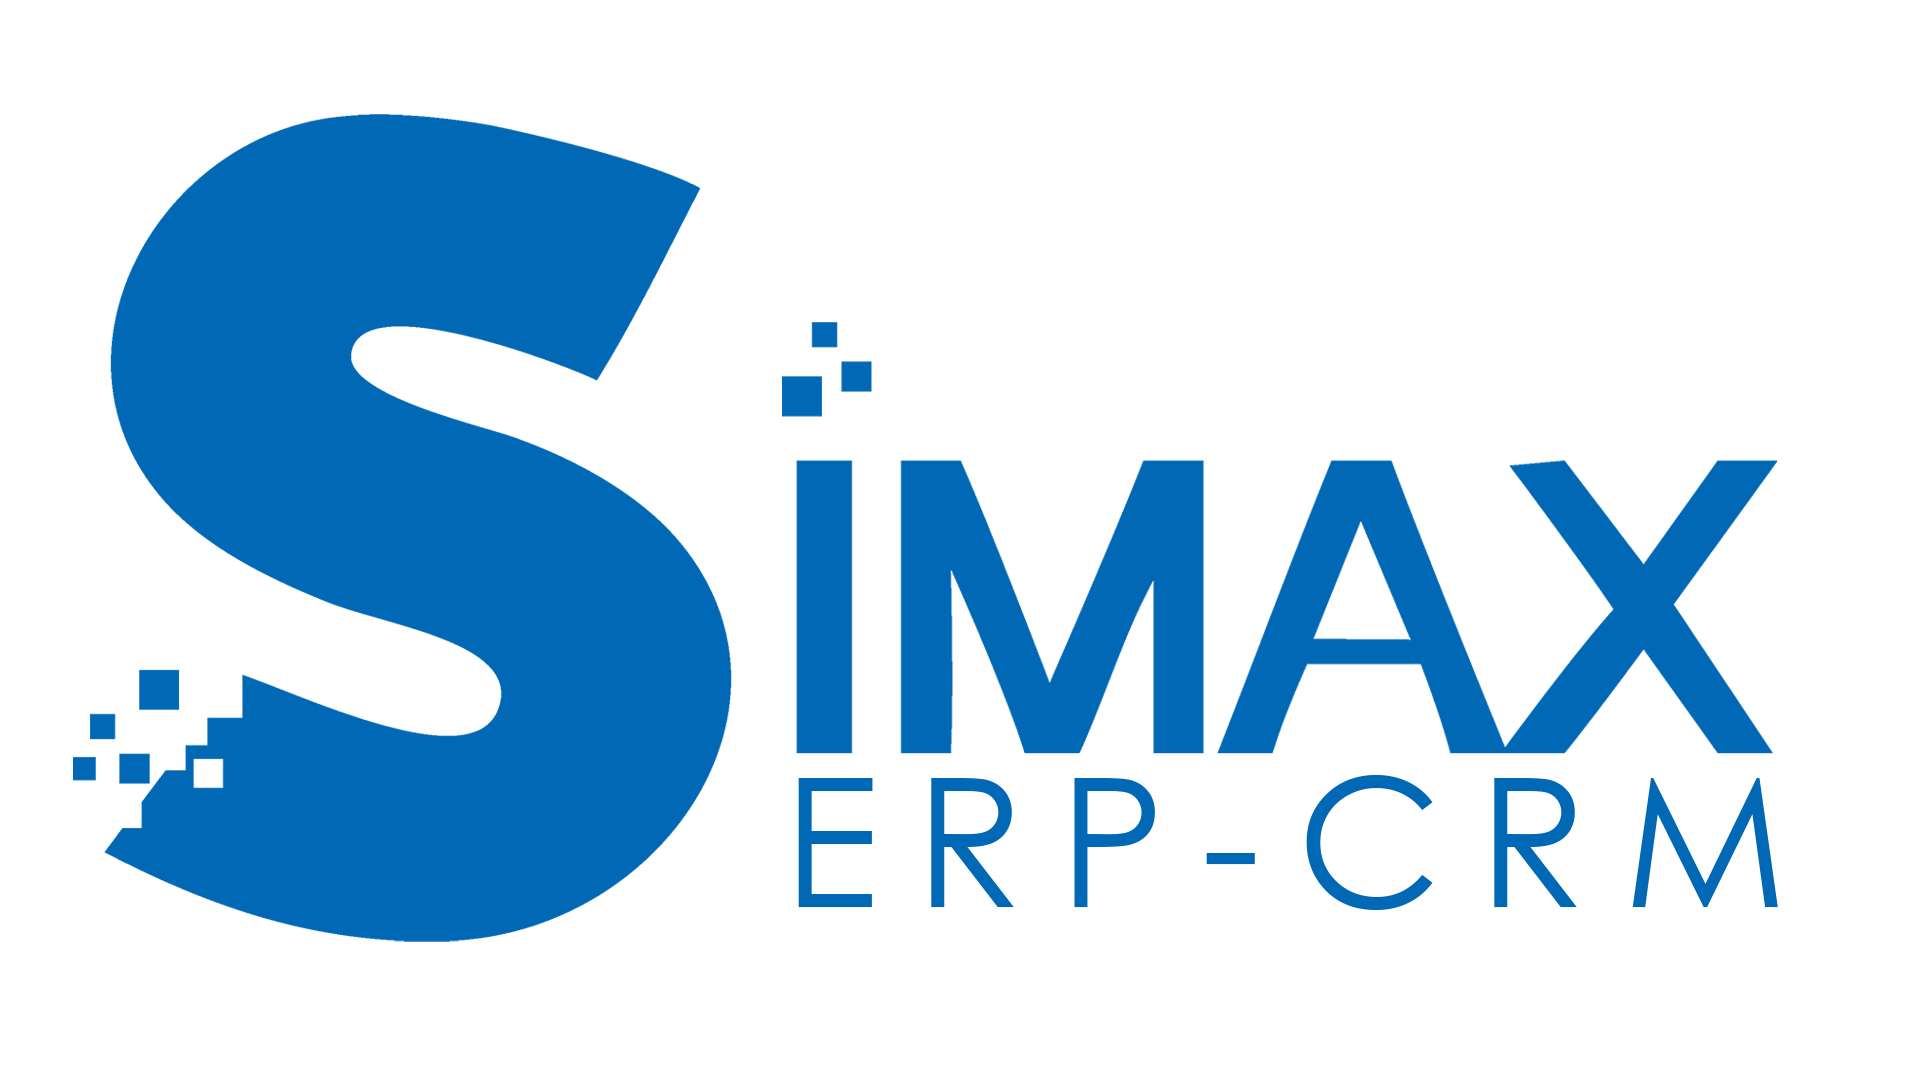 SIMAX-ERP-CRM (1)